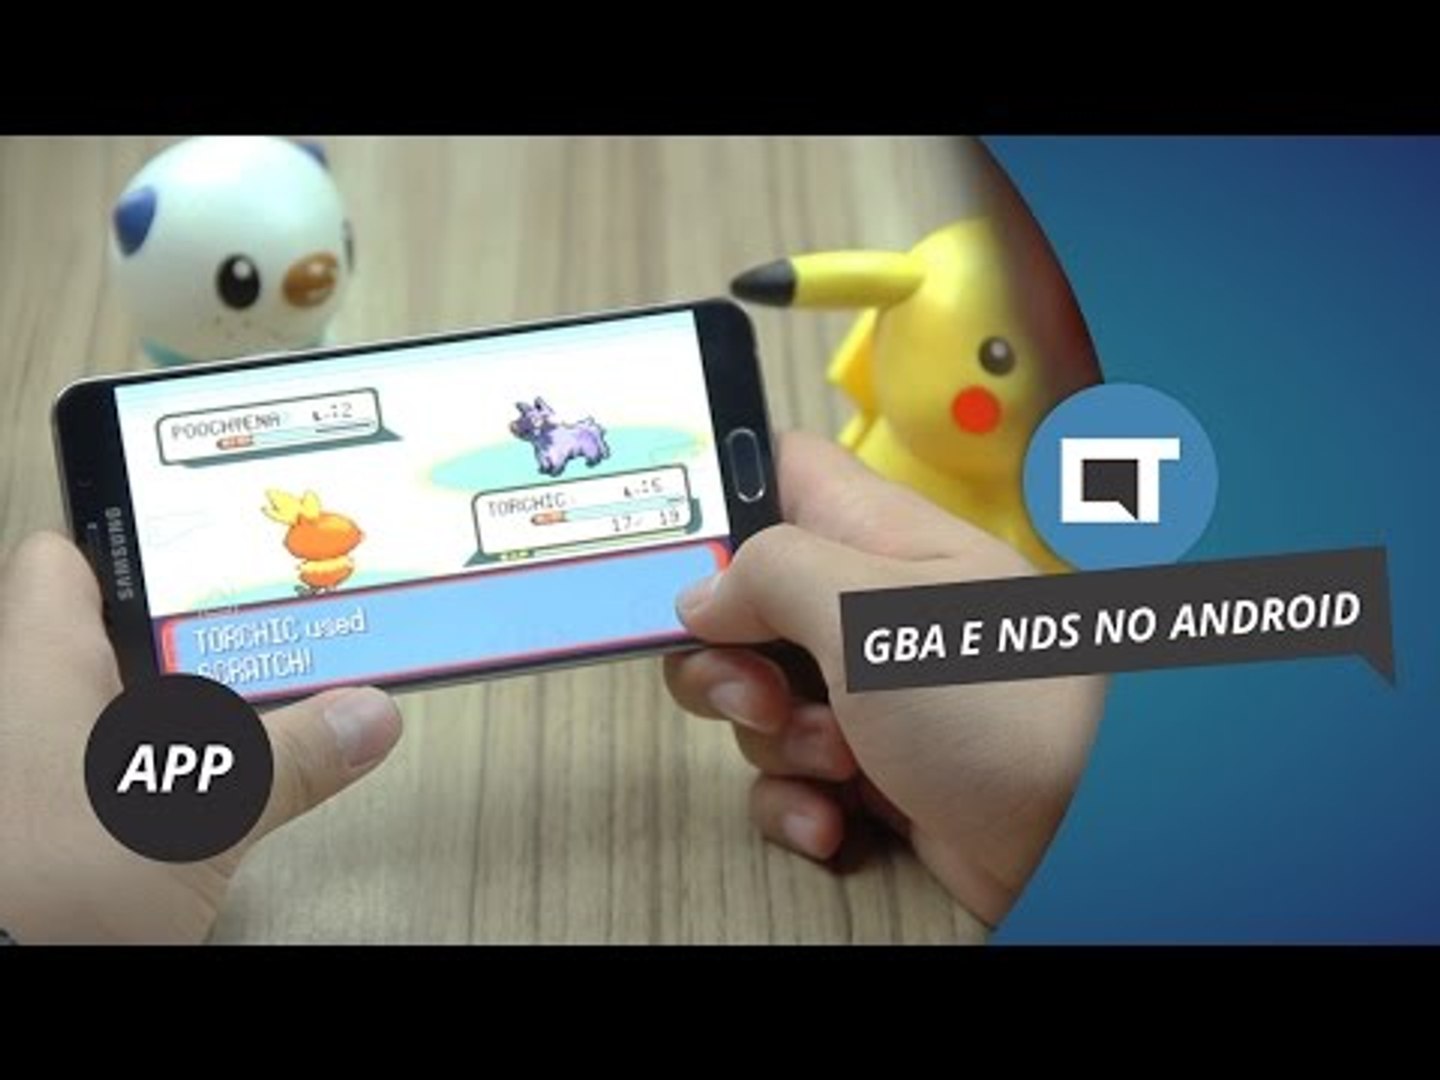 Nintendo 3DS: como comprar jogos e baixar demos na eShop [vídeo] - TecMundo